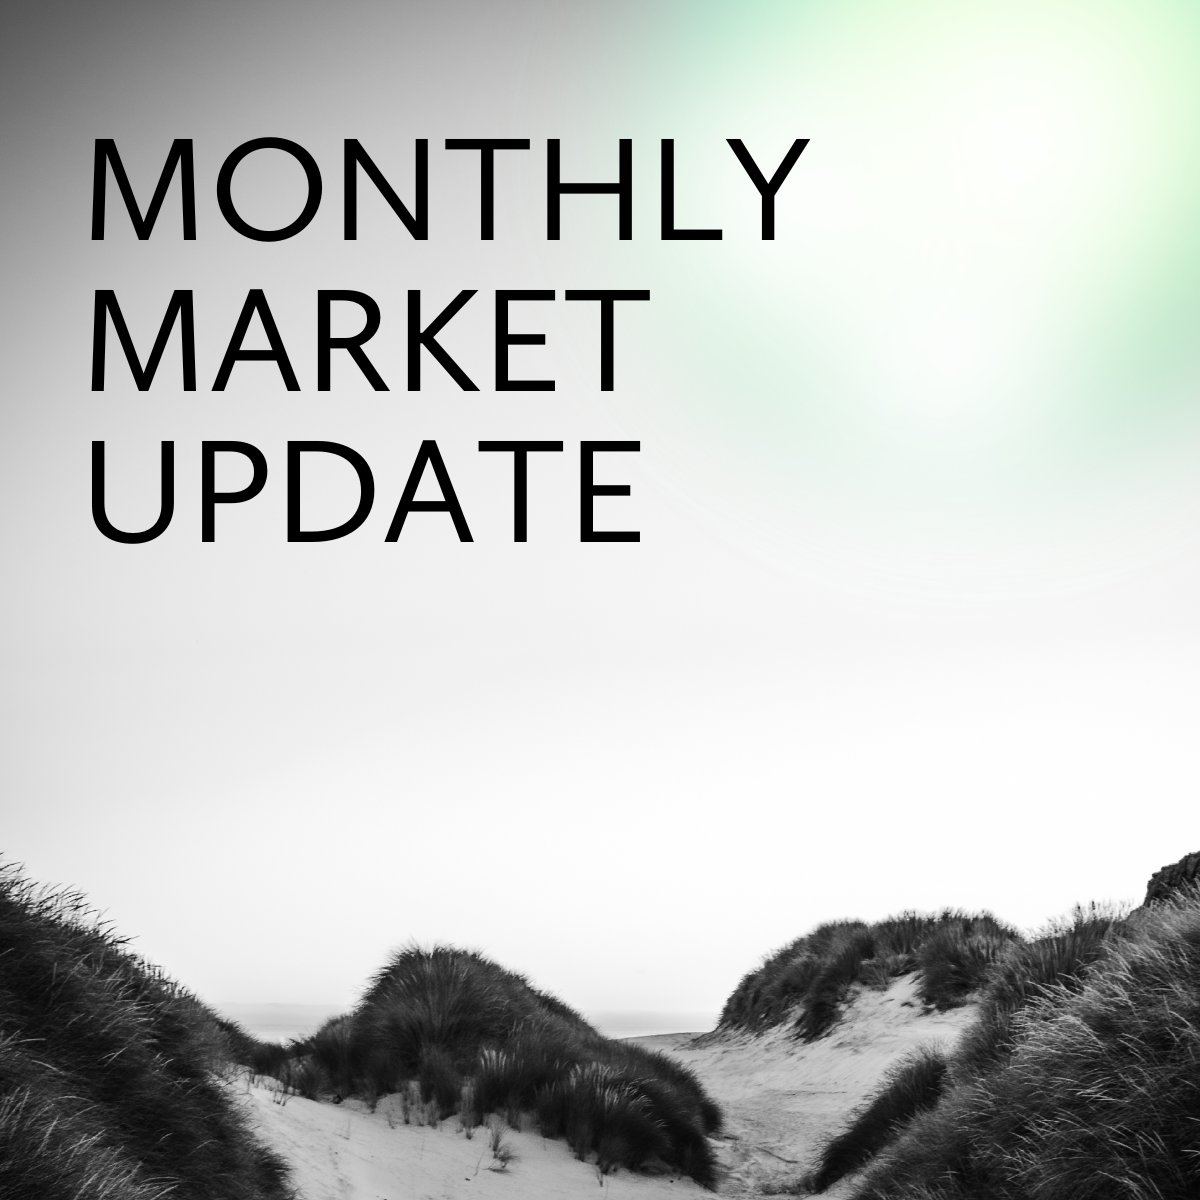 Financial Markets Update: February